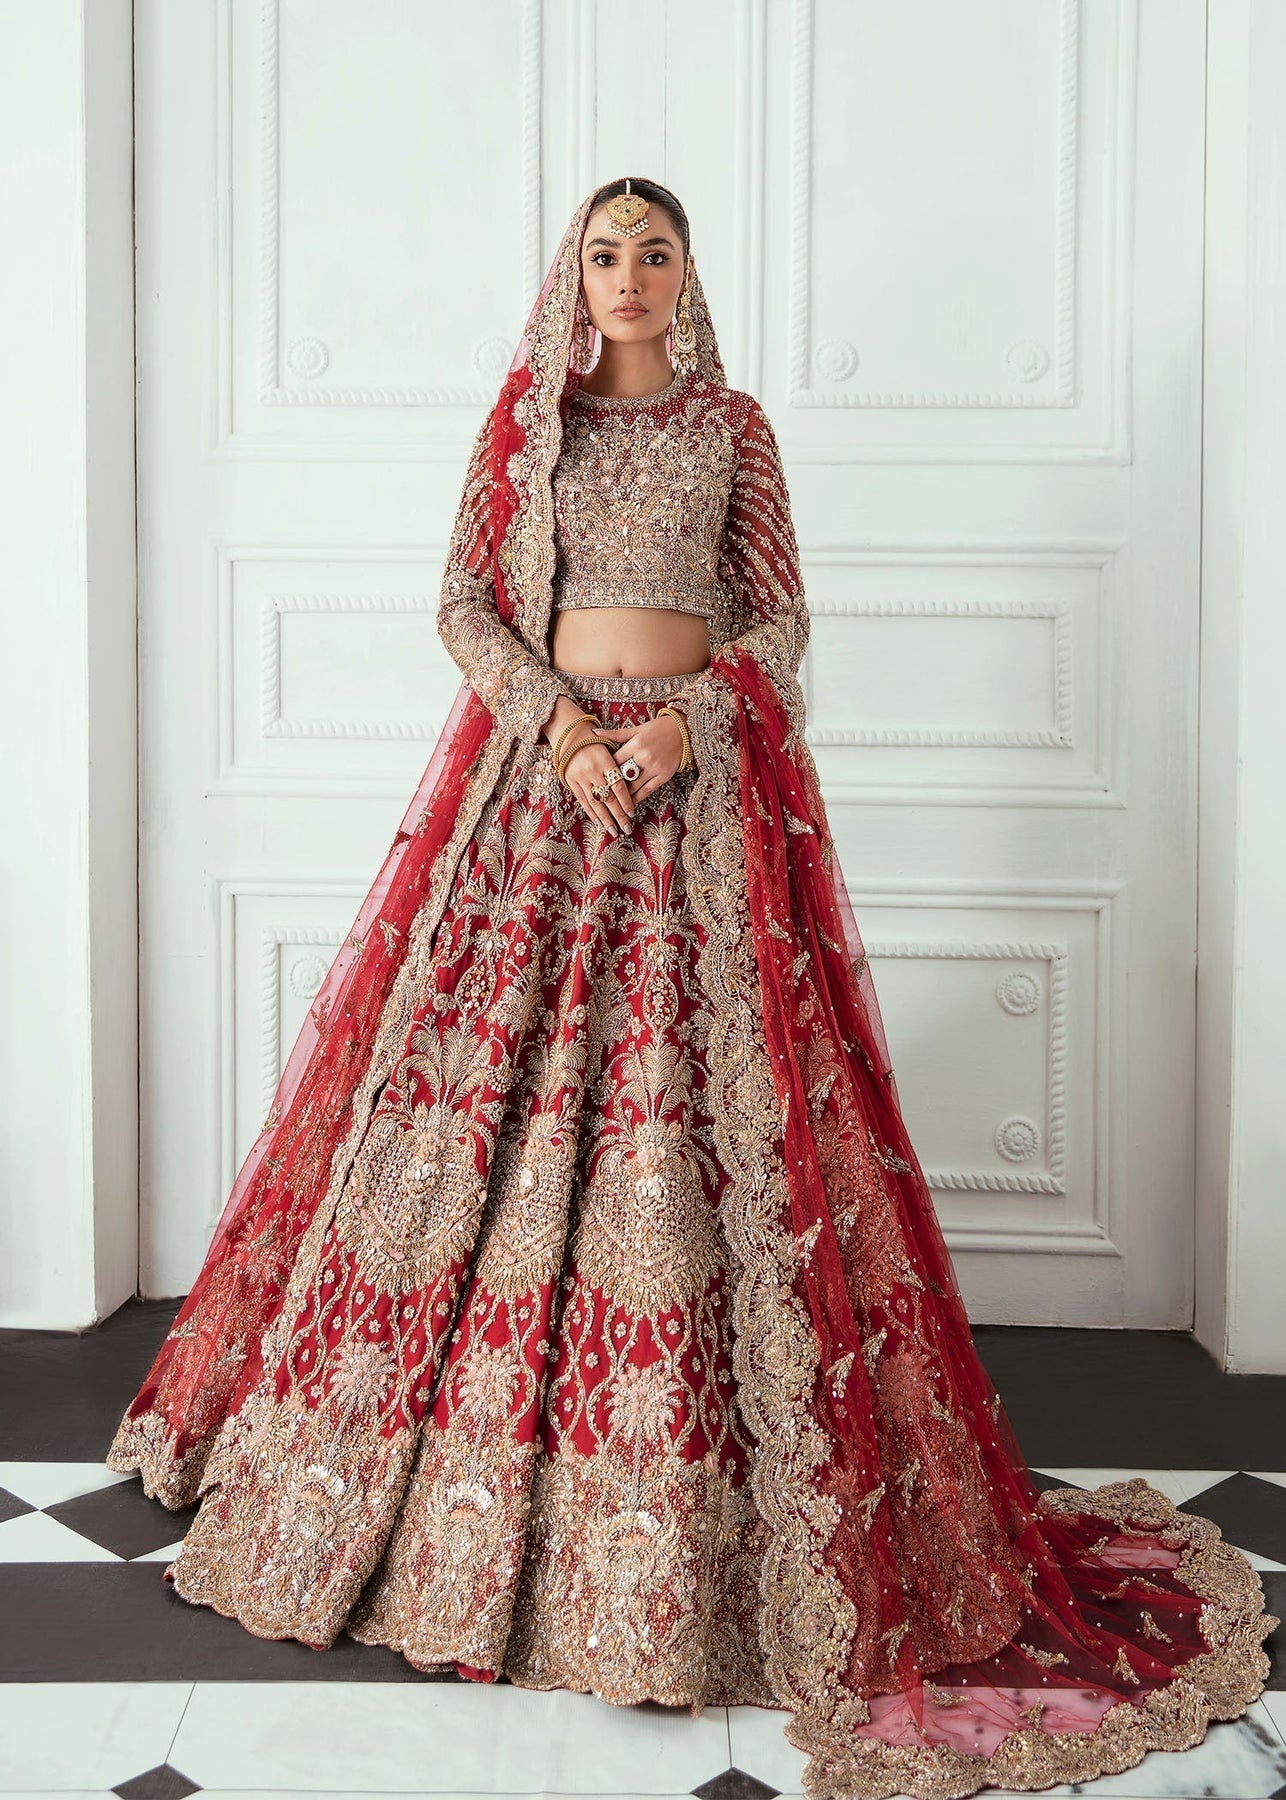 12 New Bridal Lehenga Choli Designs To Slay In 2021 | Types Of Lehenga Choli  - Bewakoof Blog